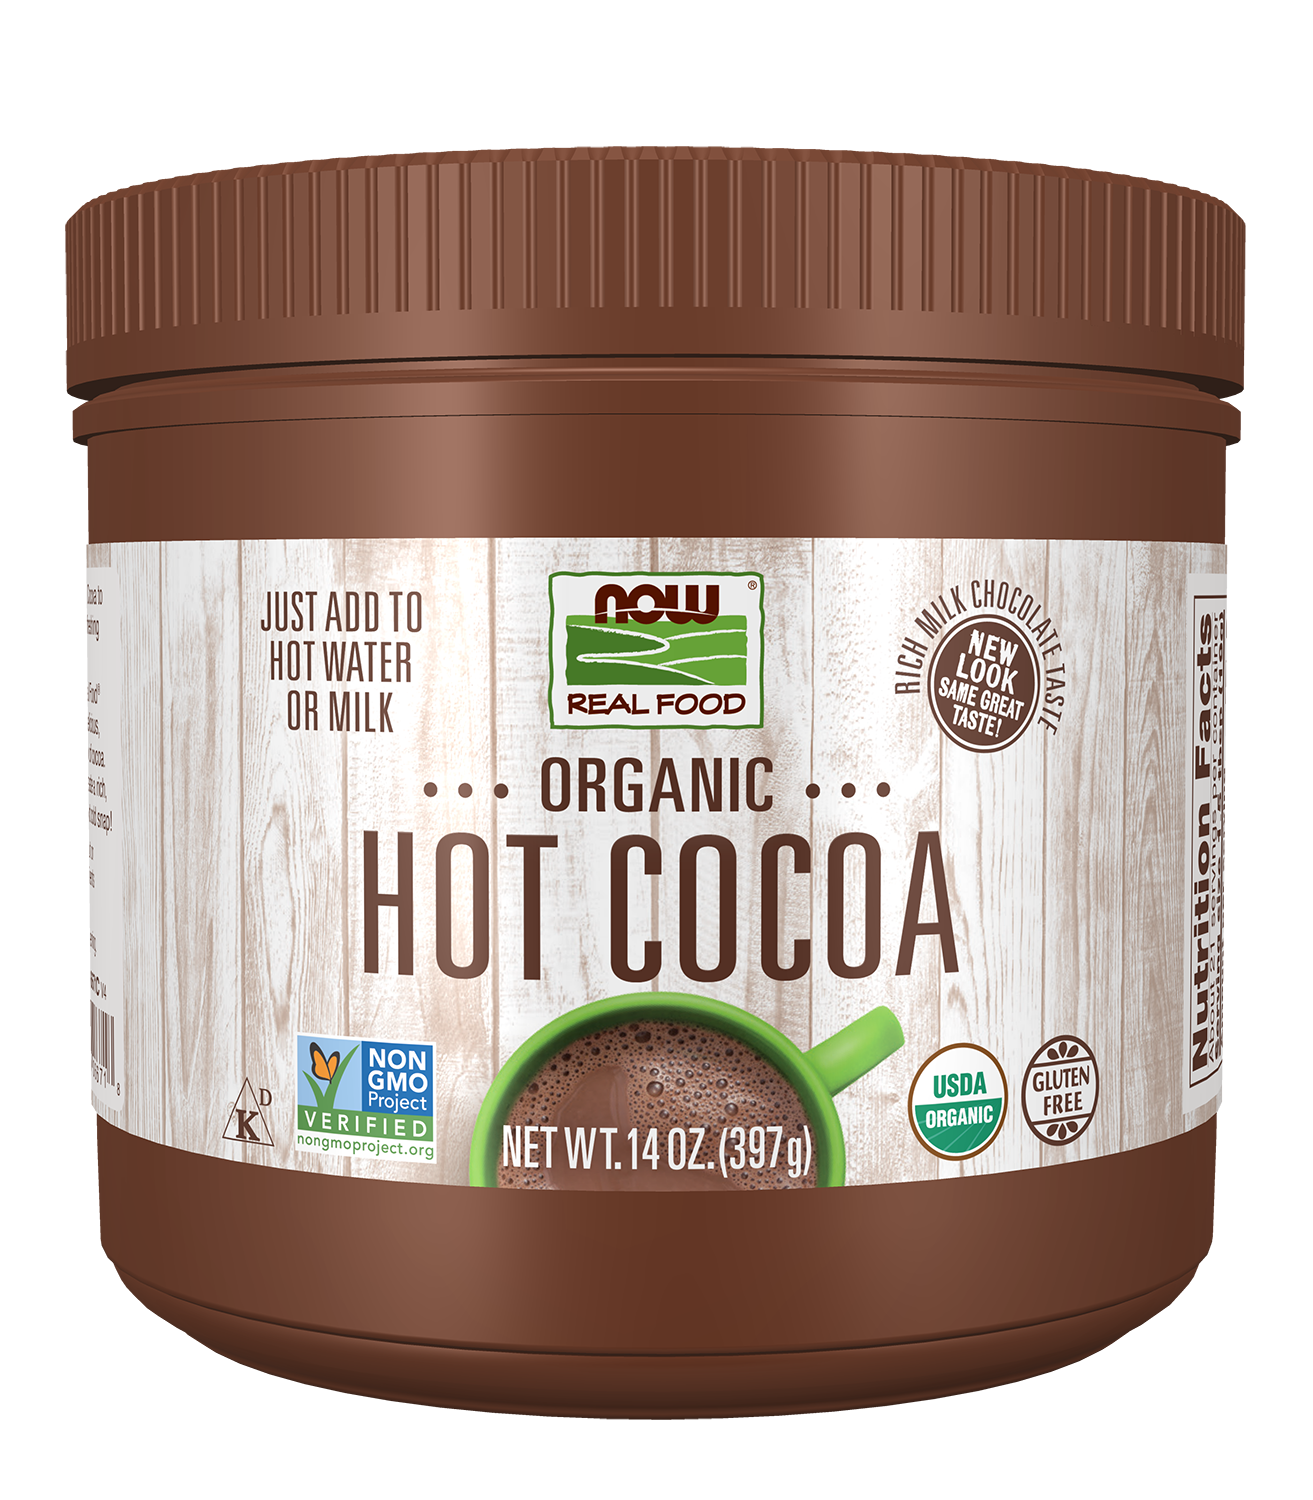 Organic Hot Cocoa, Shop for Organic Hot Chocolate